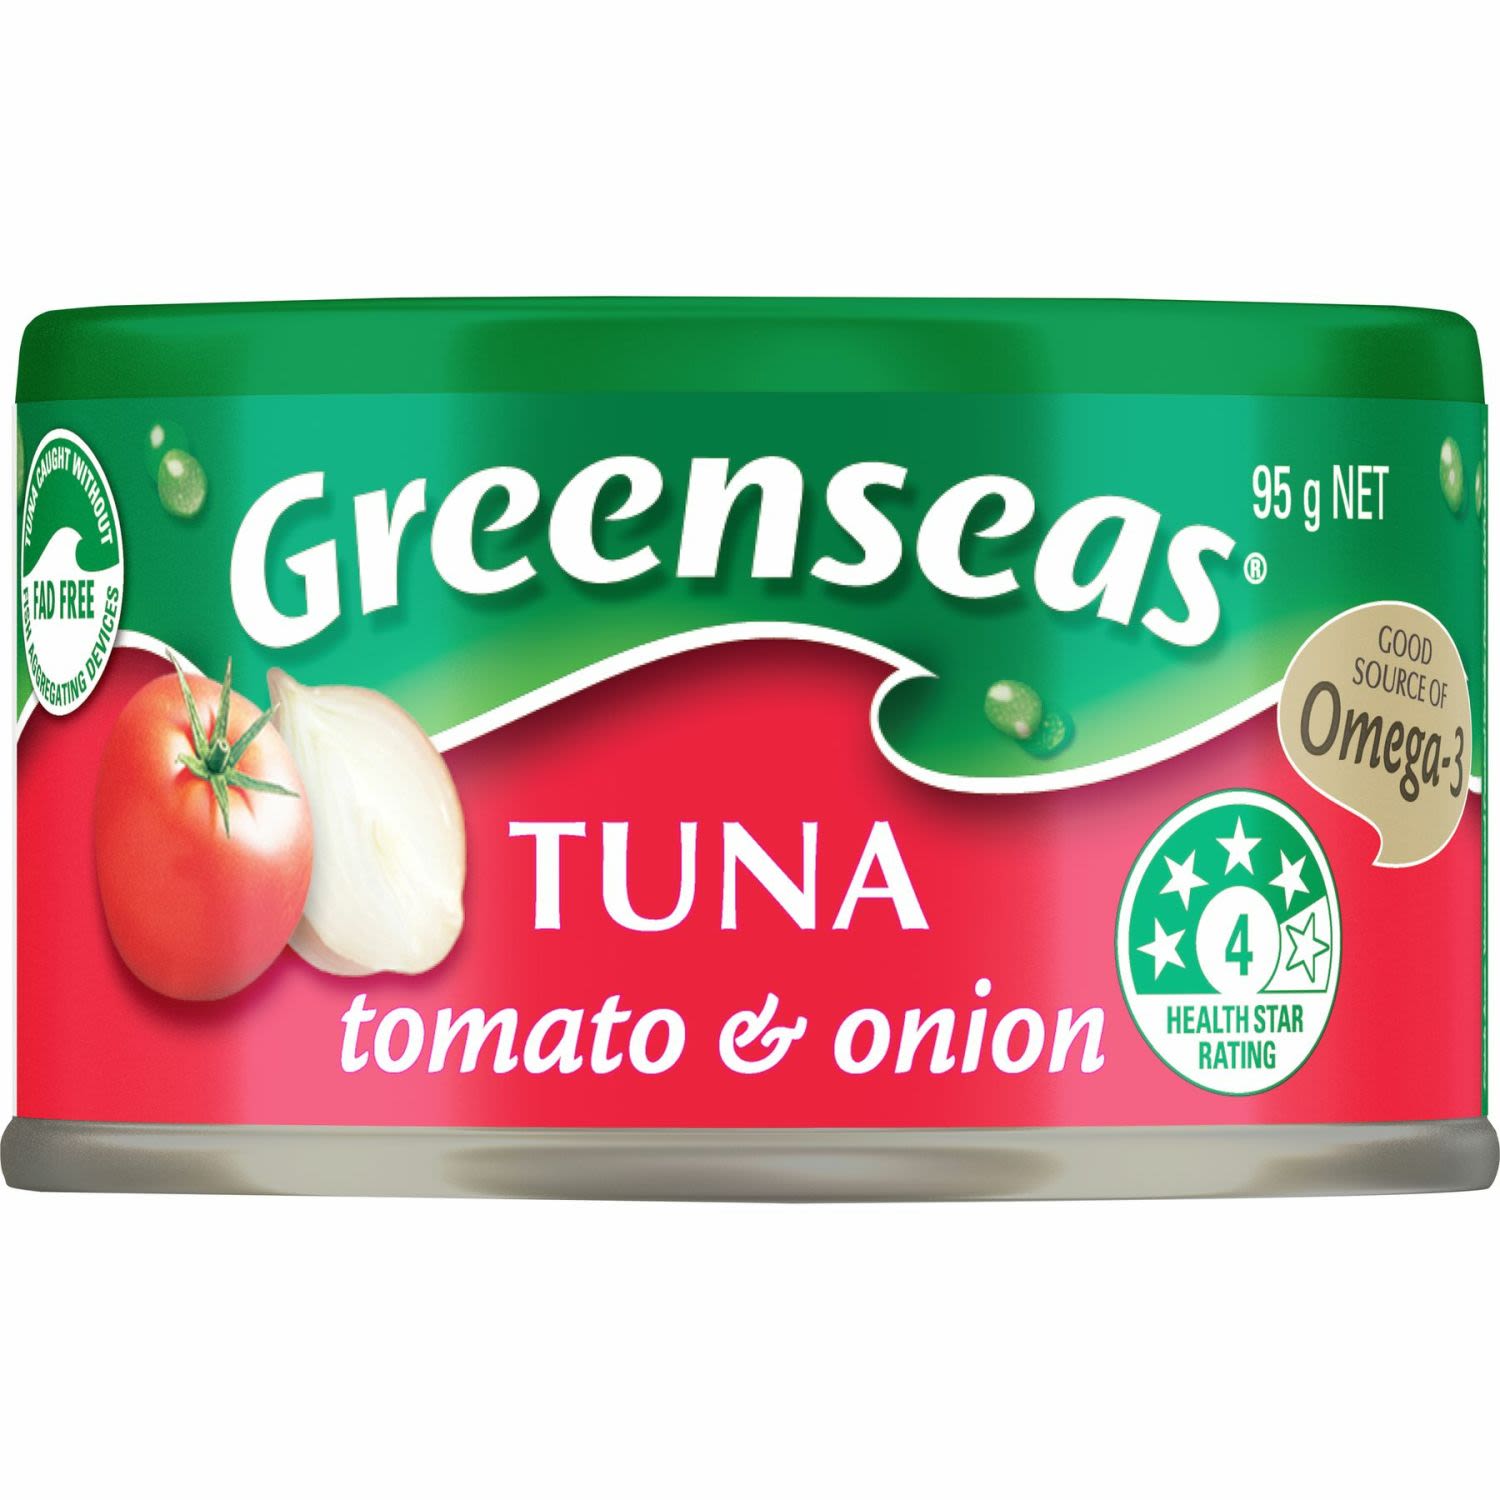 Greenseas Tomato & Onion Tuna, 95 Gram